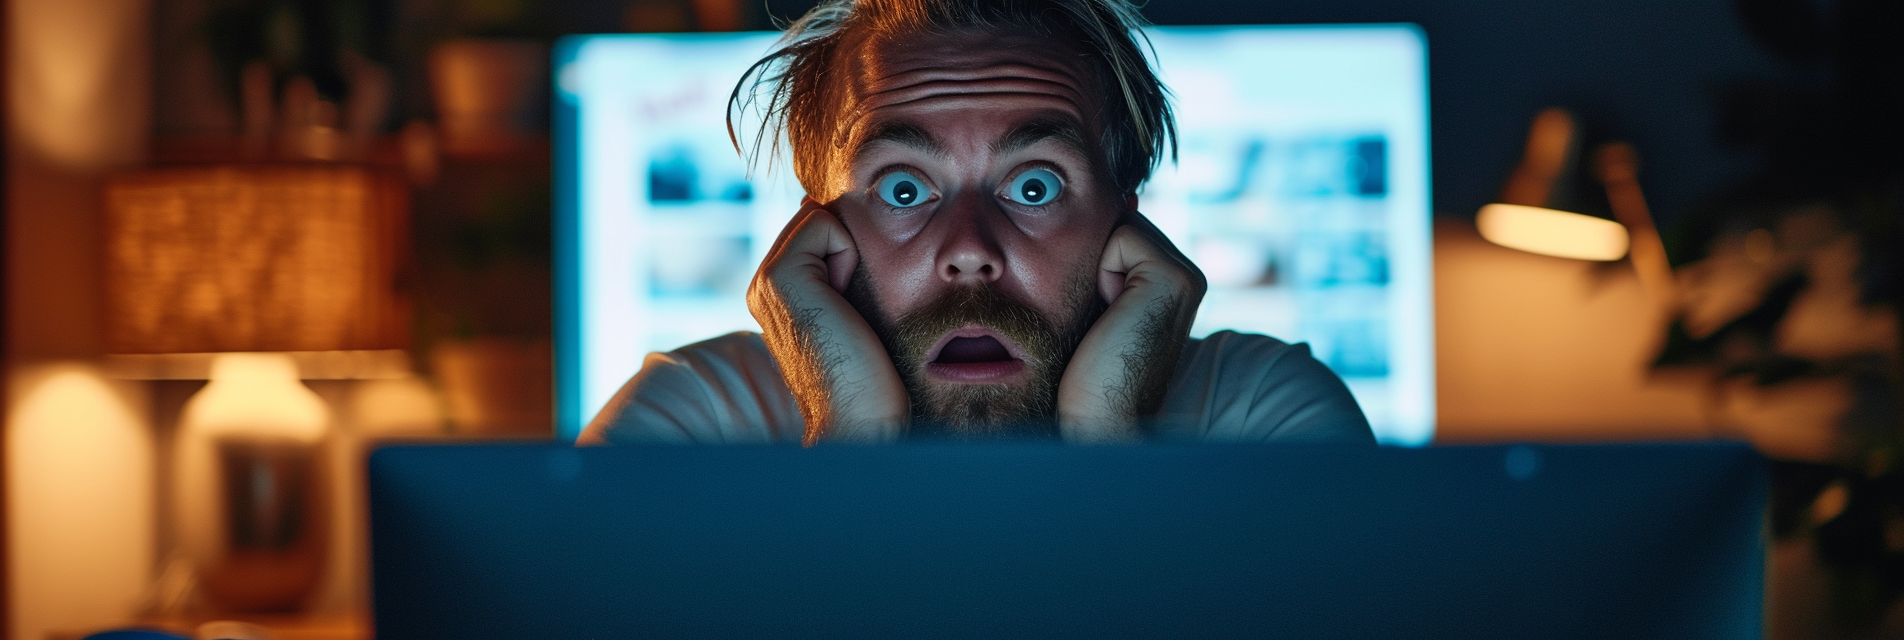 A person looking shocked at a computer screen | Trello Data Breach